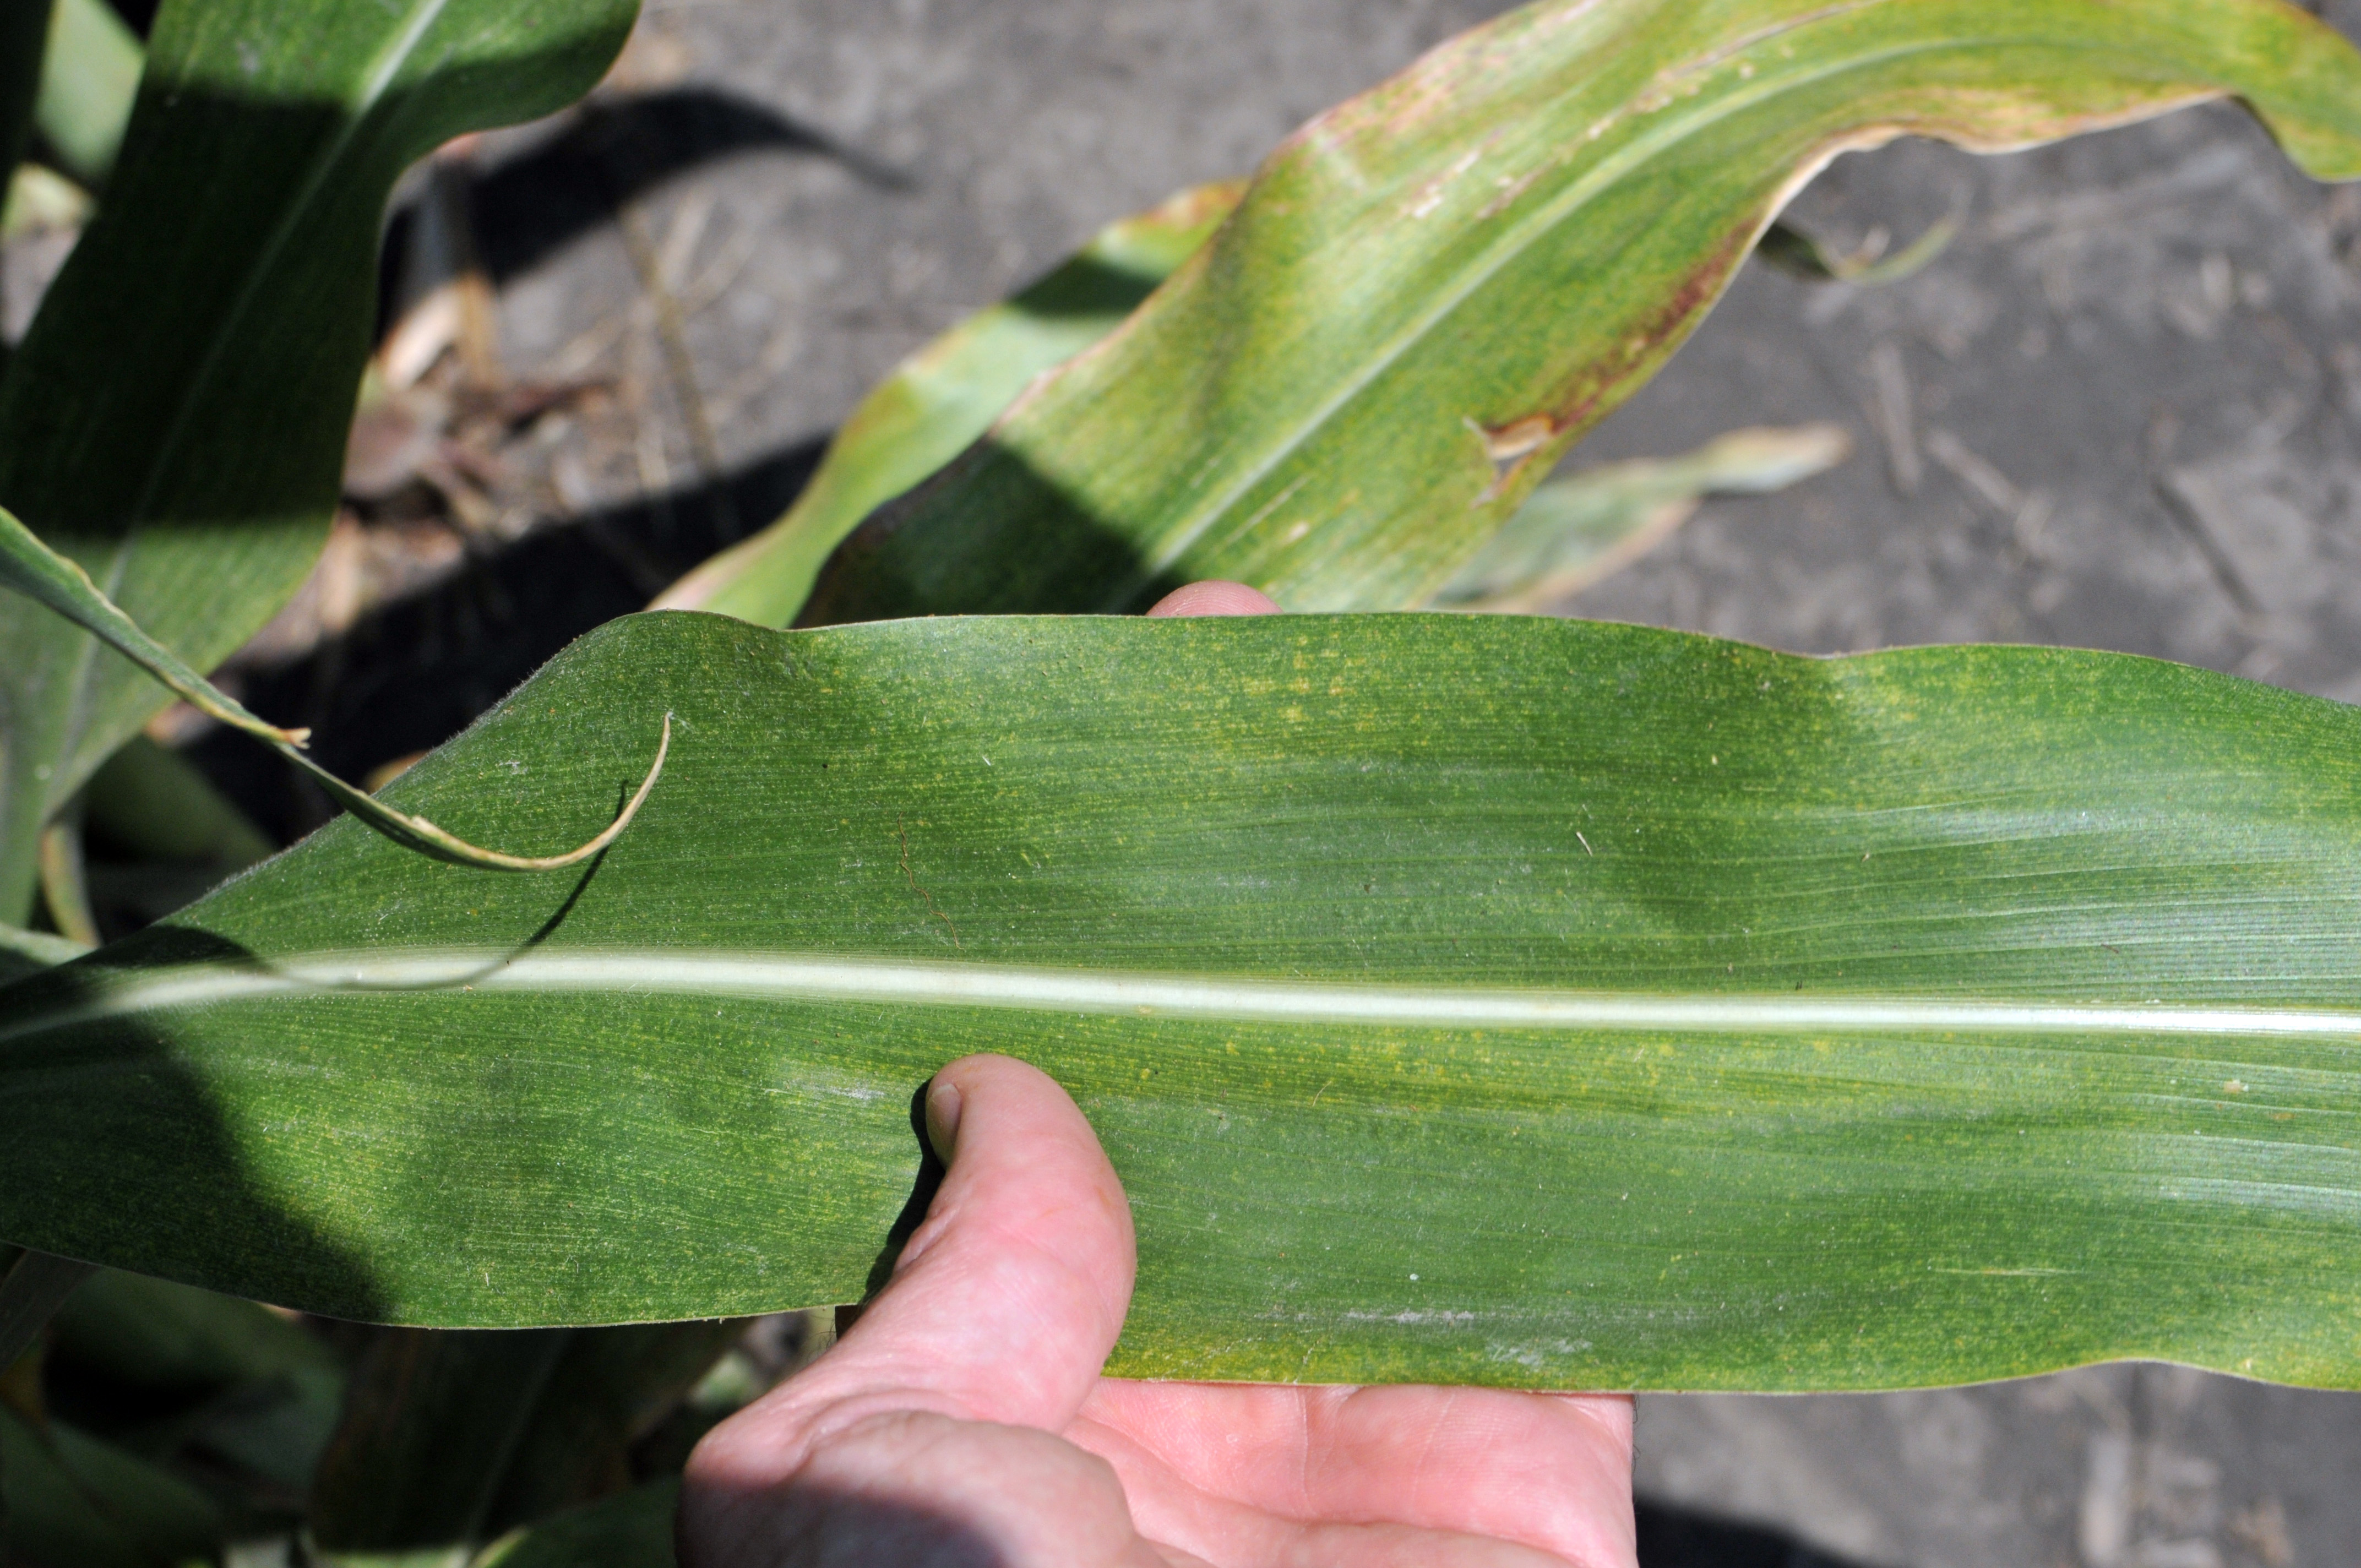 Stippling damage on corn